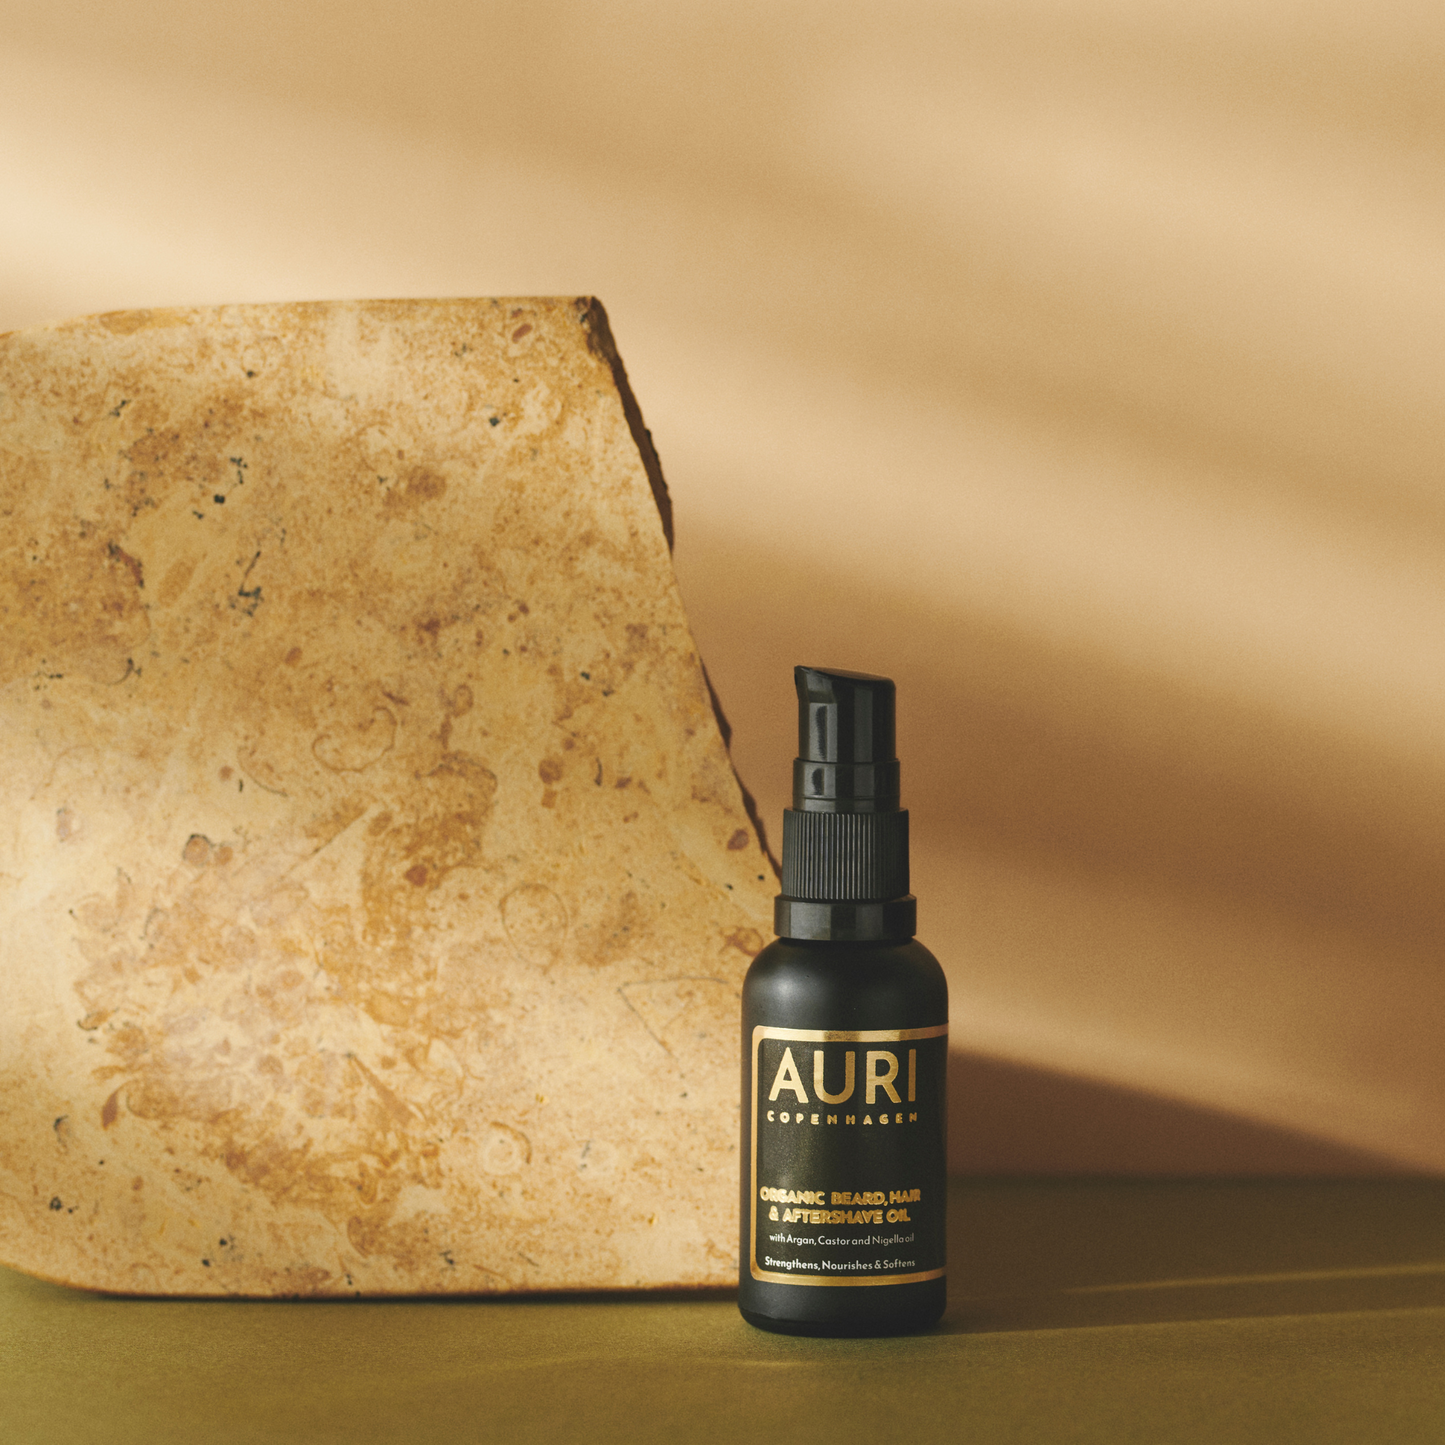 Beard, Hair & Aftershave oil with argan oil and castor (ricinus) oil